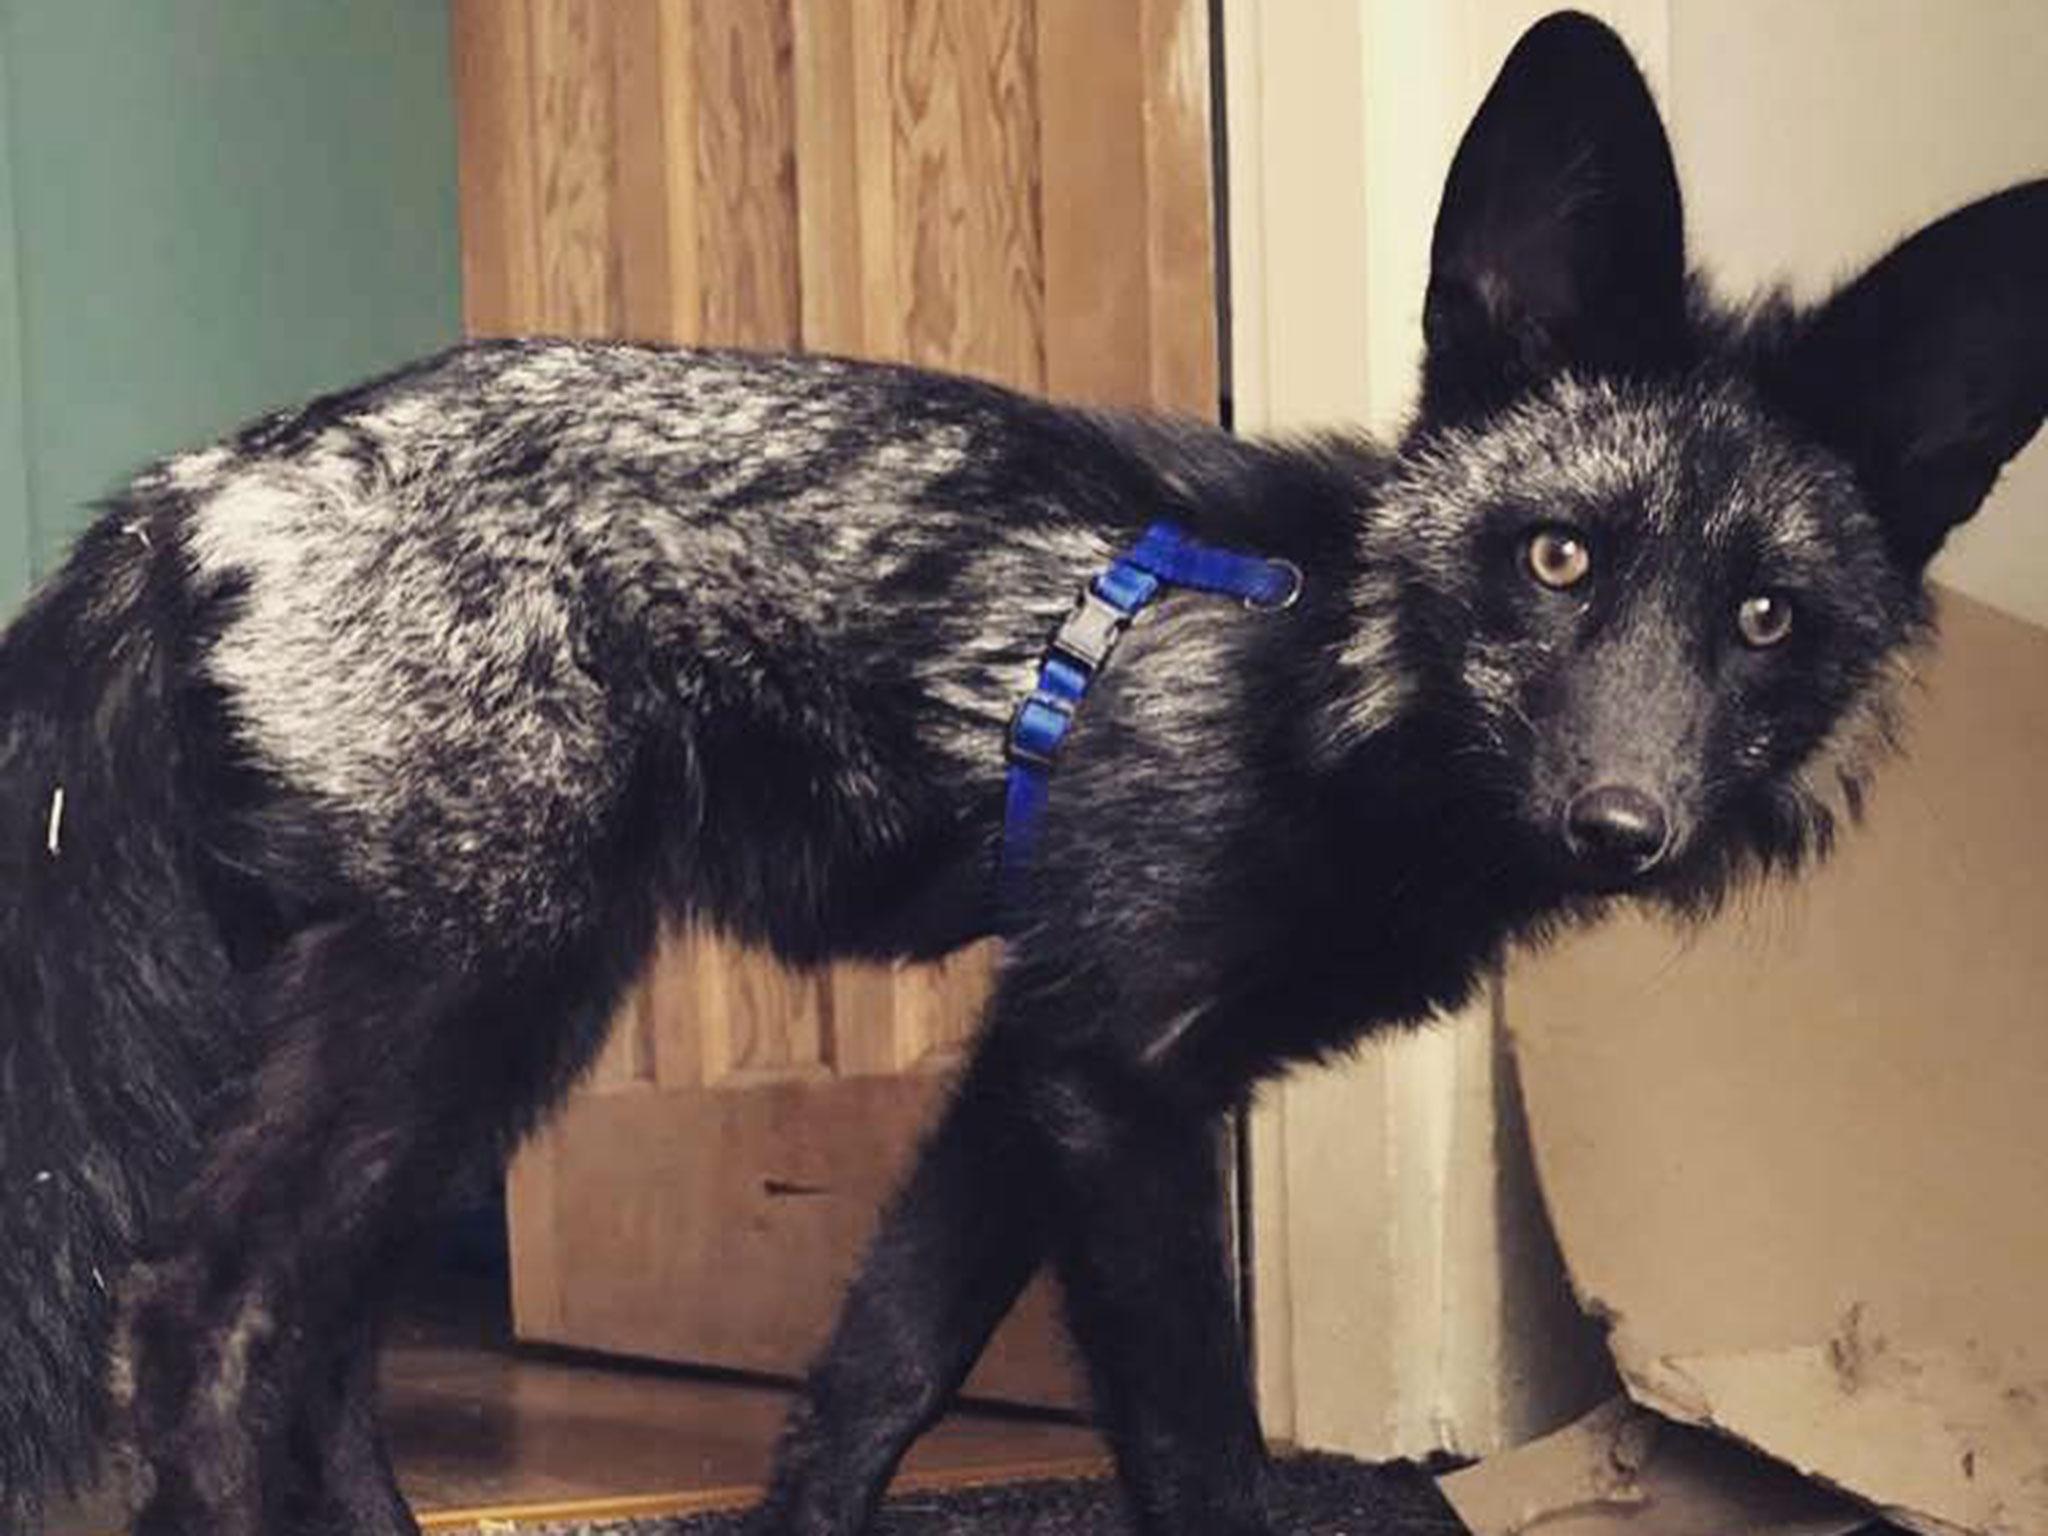 Wilf the black fox had escaped from his enclosure